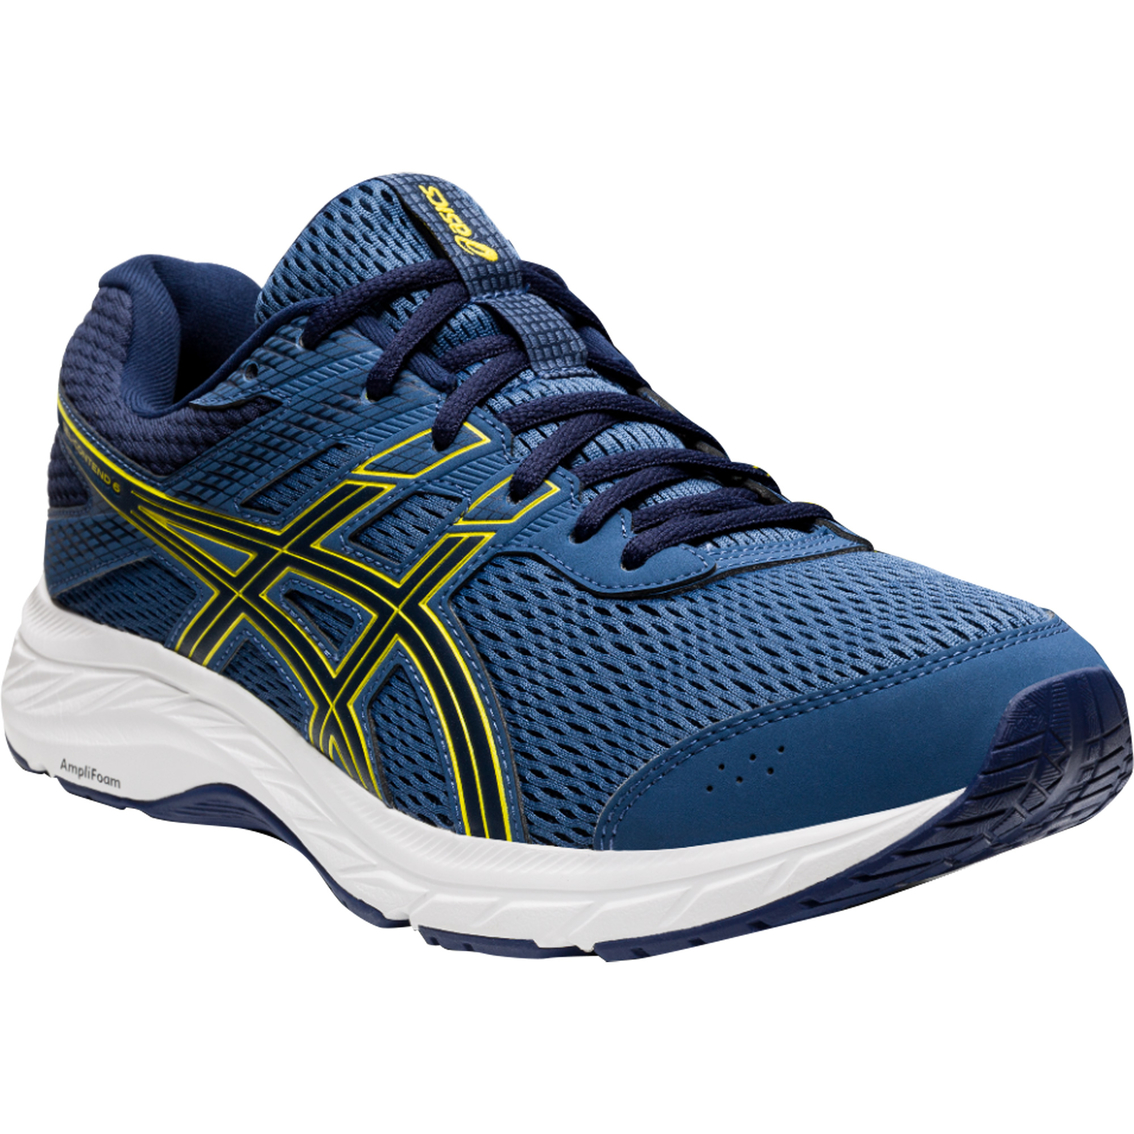 Asics Men's Gel Contend 6 Running Shoes | Men's Athletic Shoes | Shoes ...